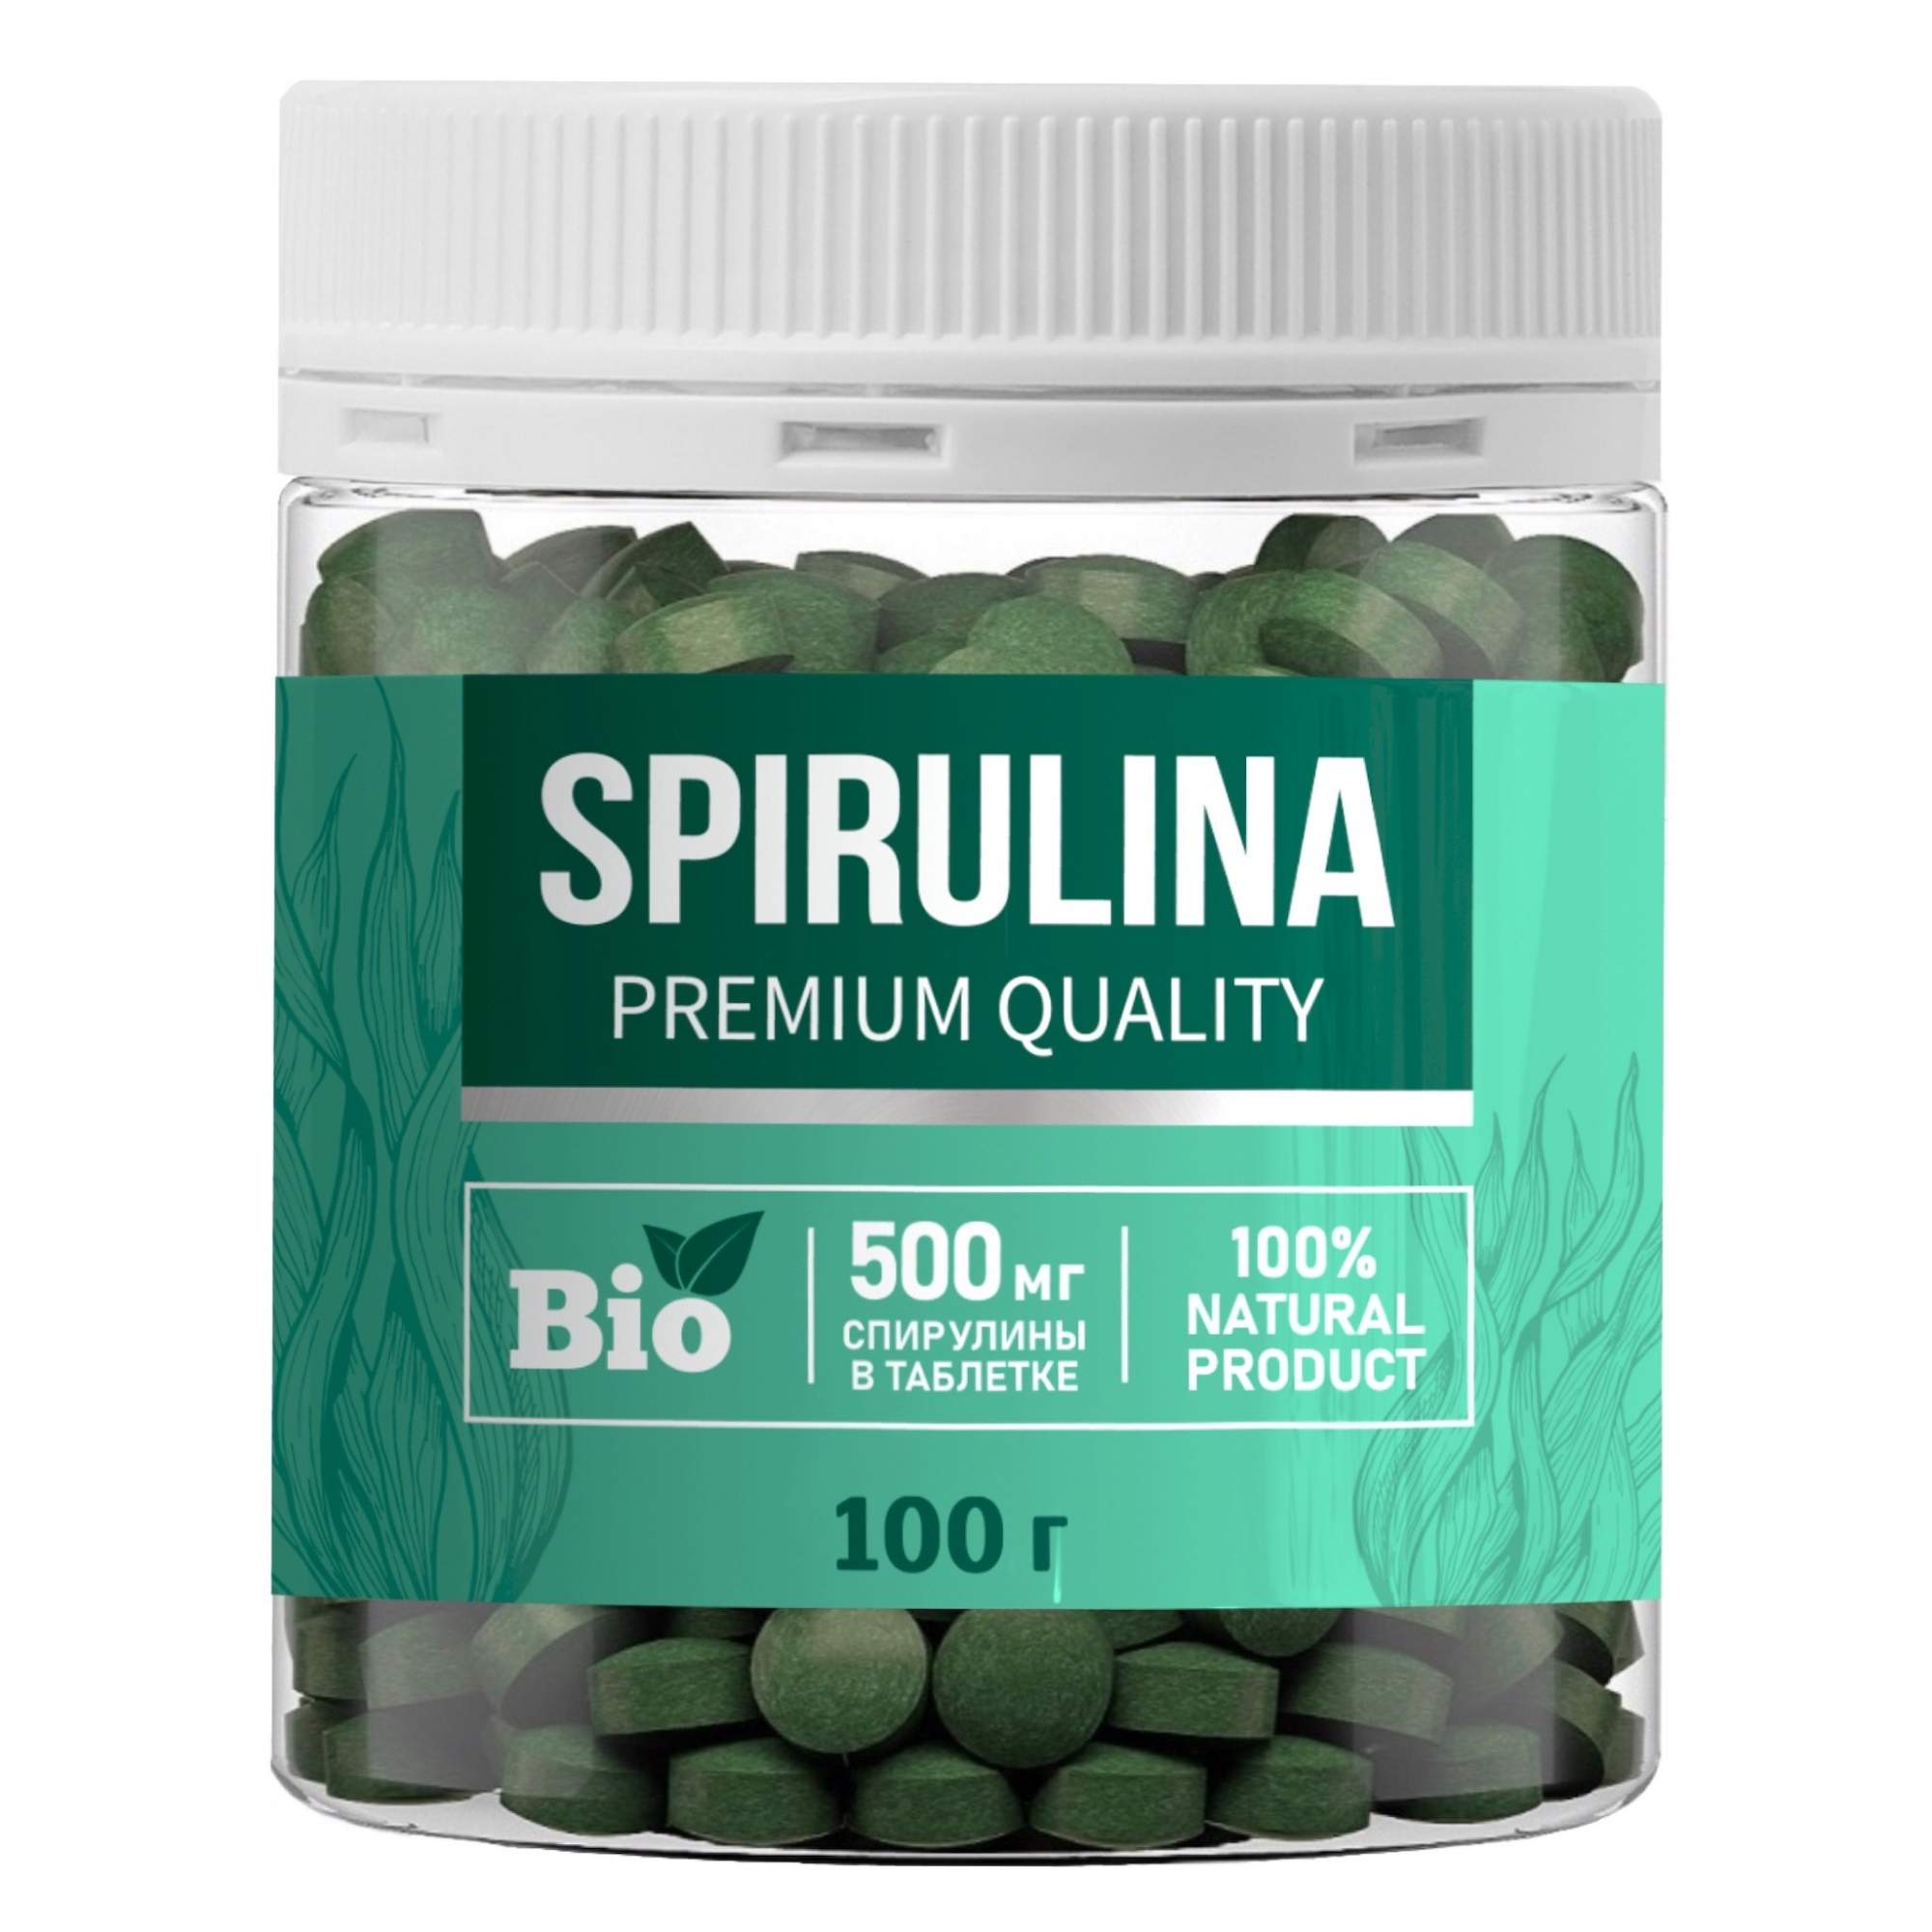 Спирулина PREMIUM NEW банка (100г.) 200 таб. по 500 мг. - состав и характеристика - Мегамаркет